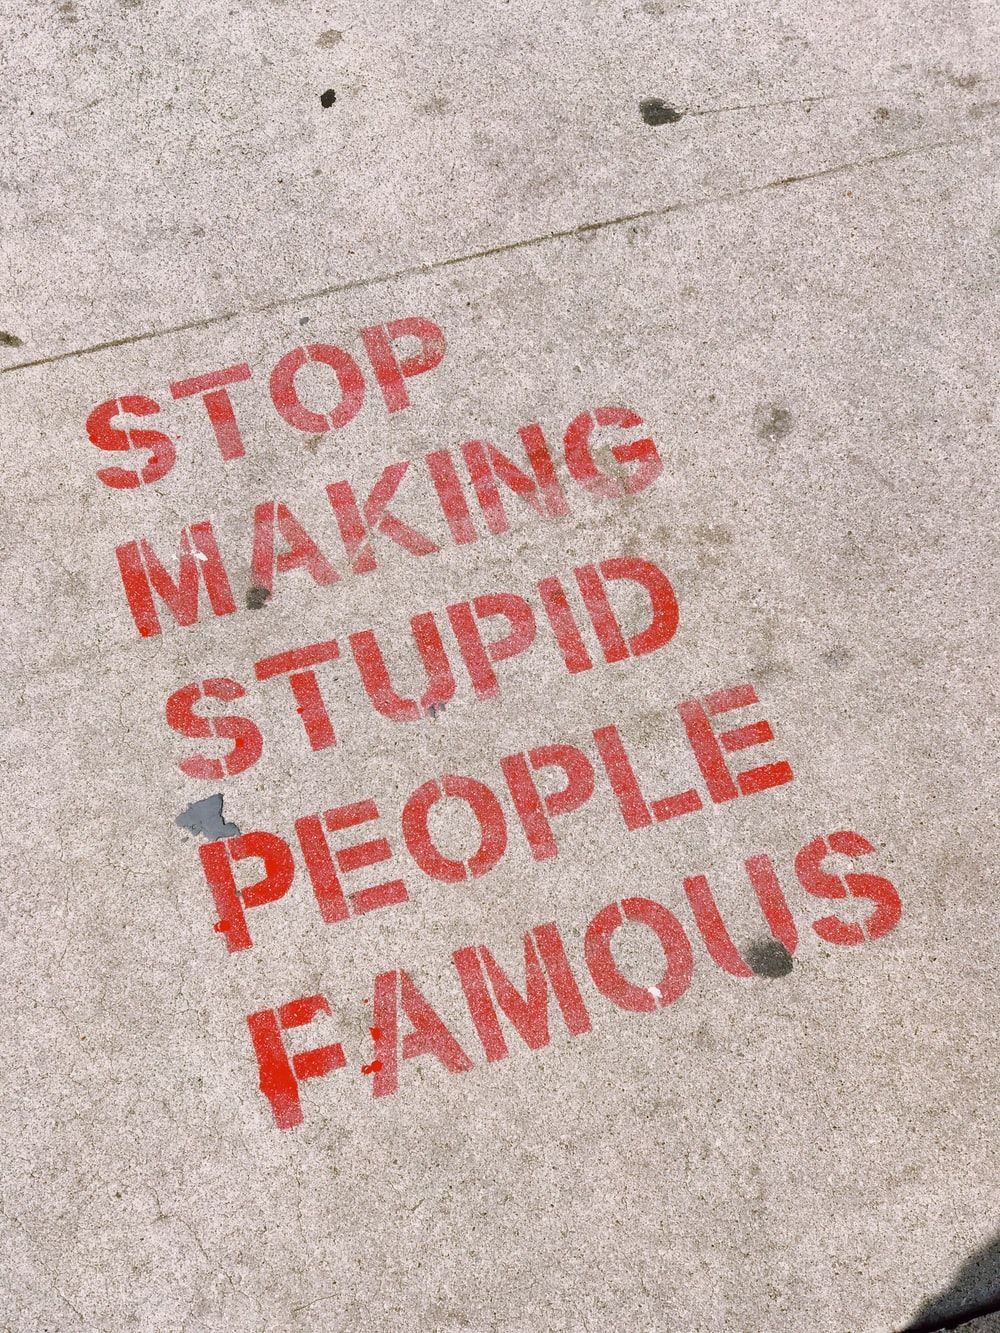 stop making stupid people famous signage photo